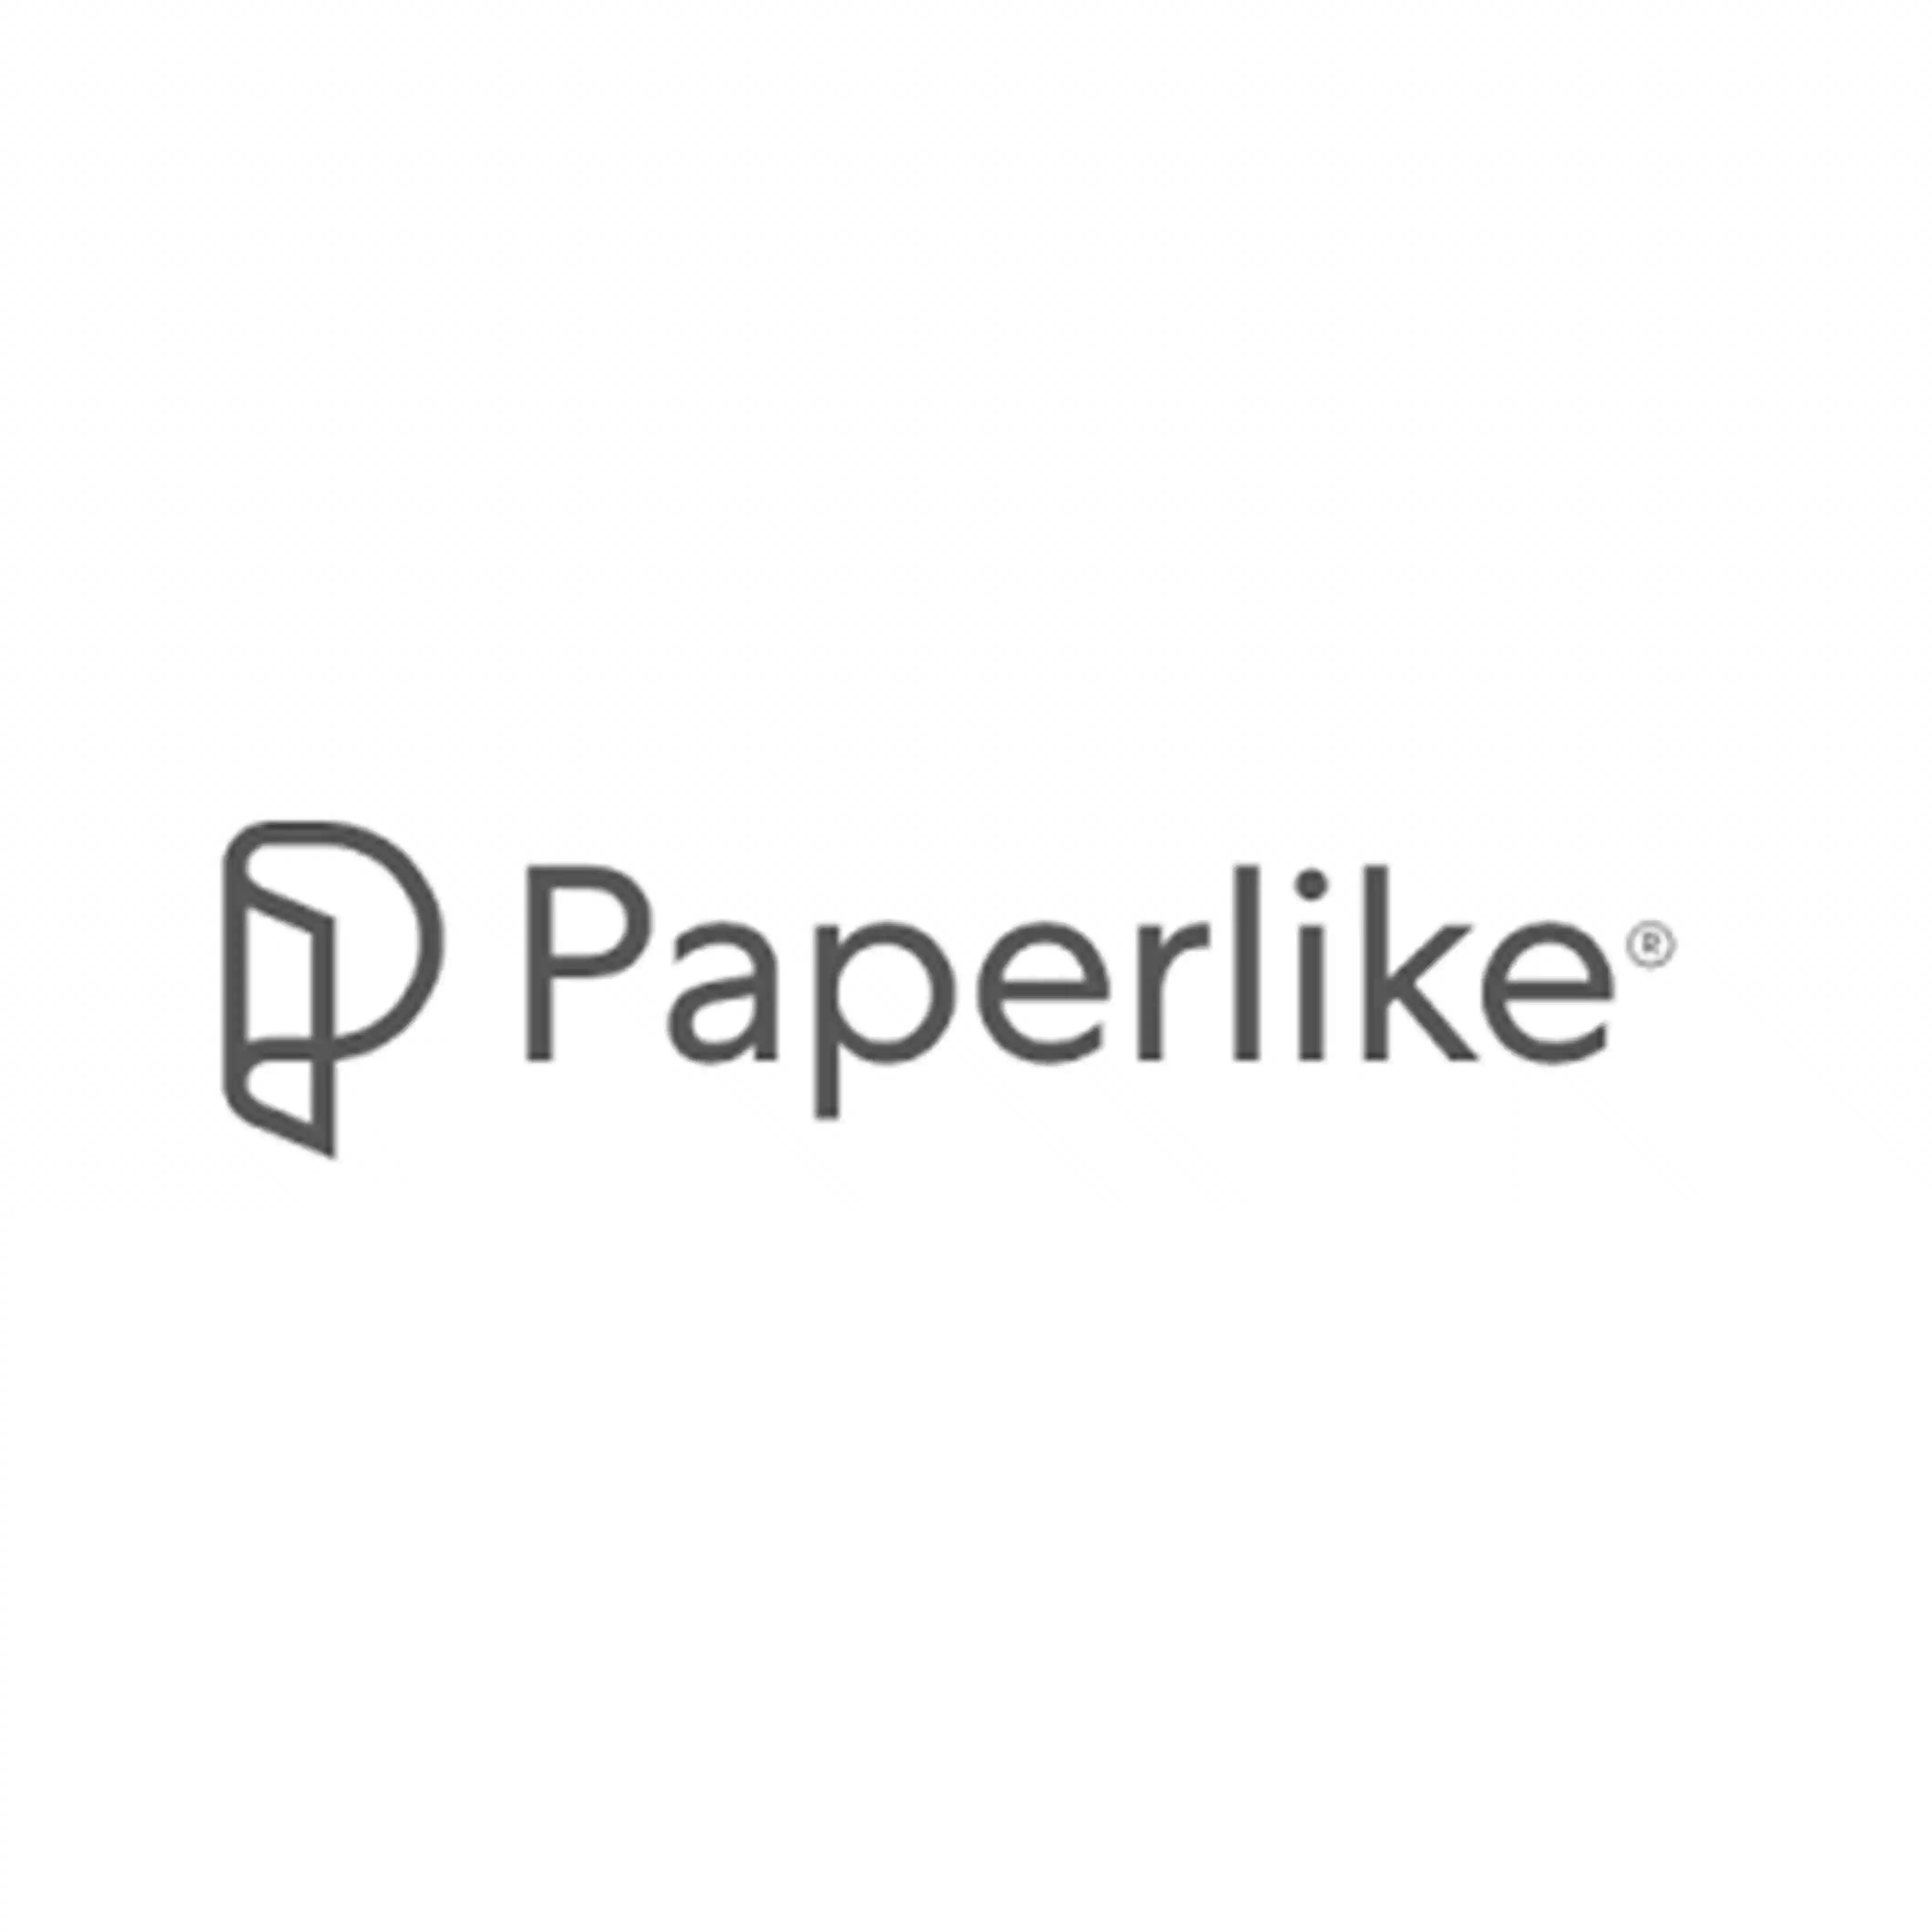 PaperLike logo